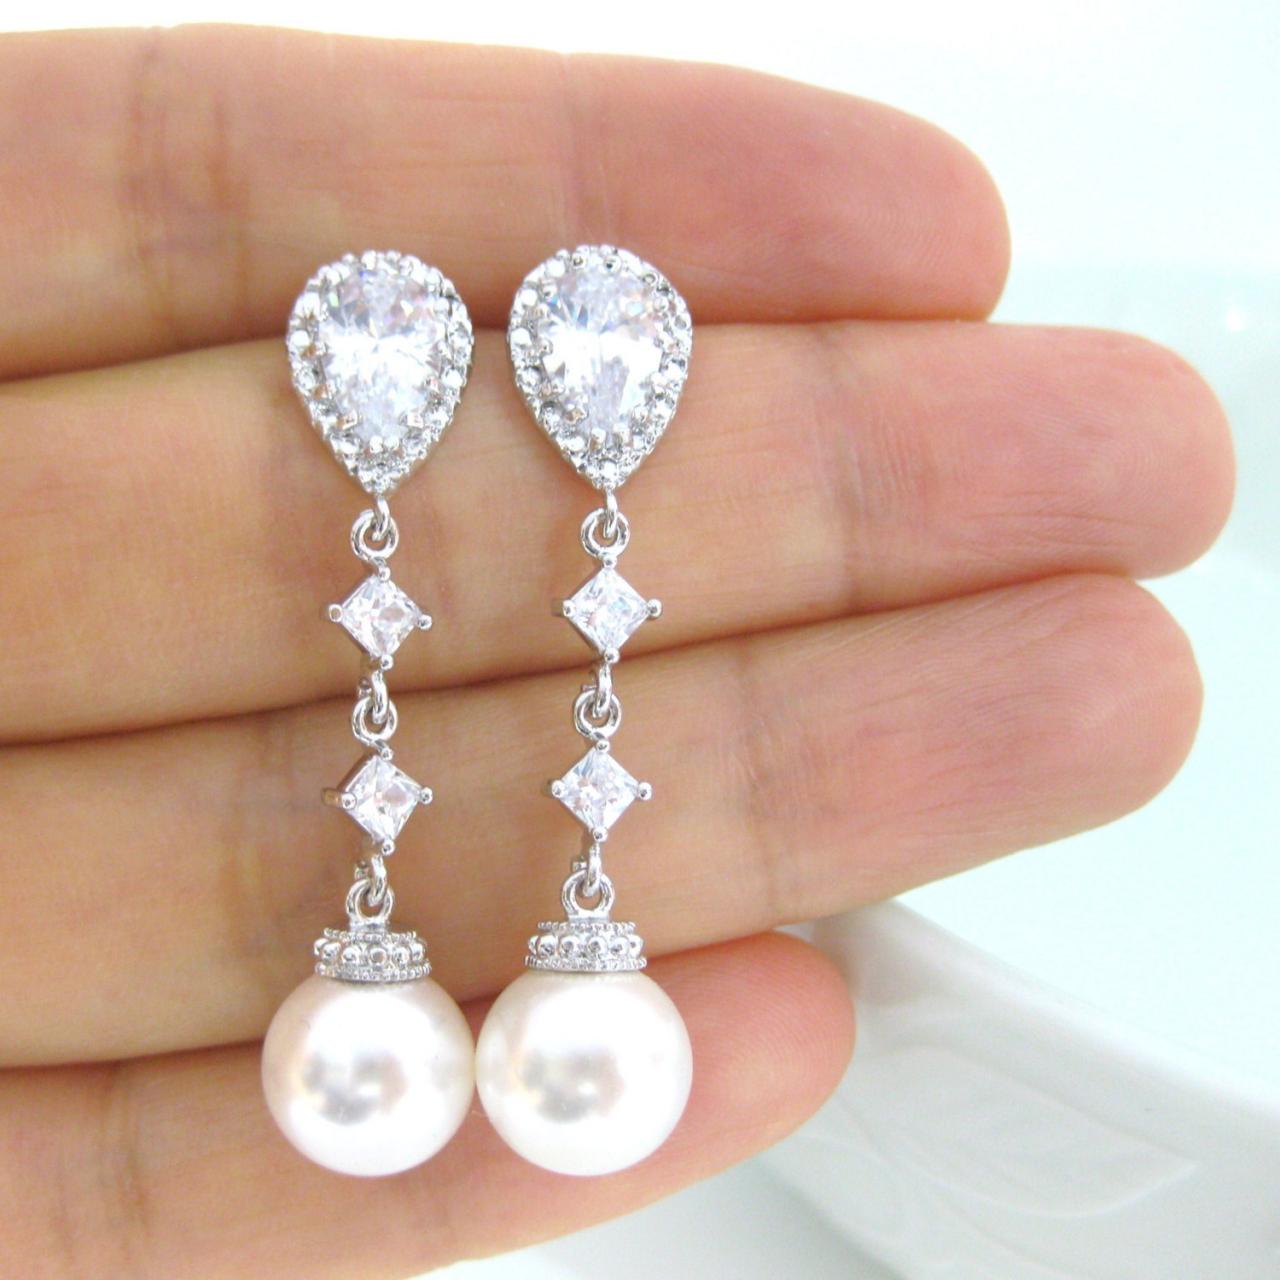 Bridal Pearl Earrings Wedding Jewelry Bridesmaid Gift Bridesmaid Earrings Swarovski Pearl Earrings (e036)